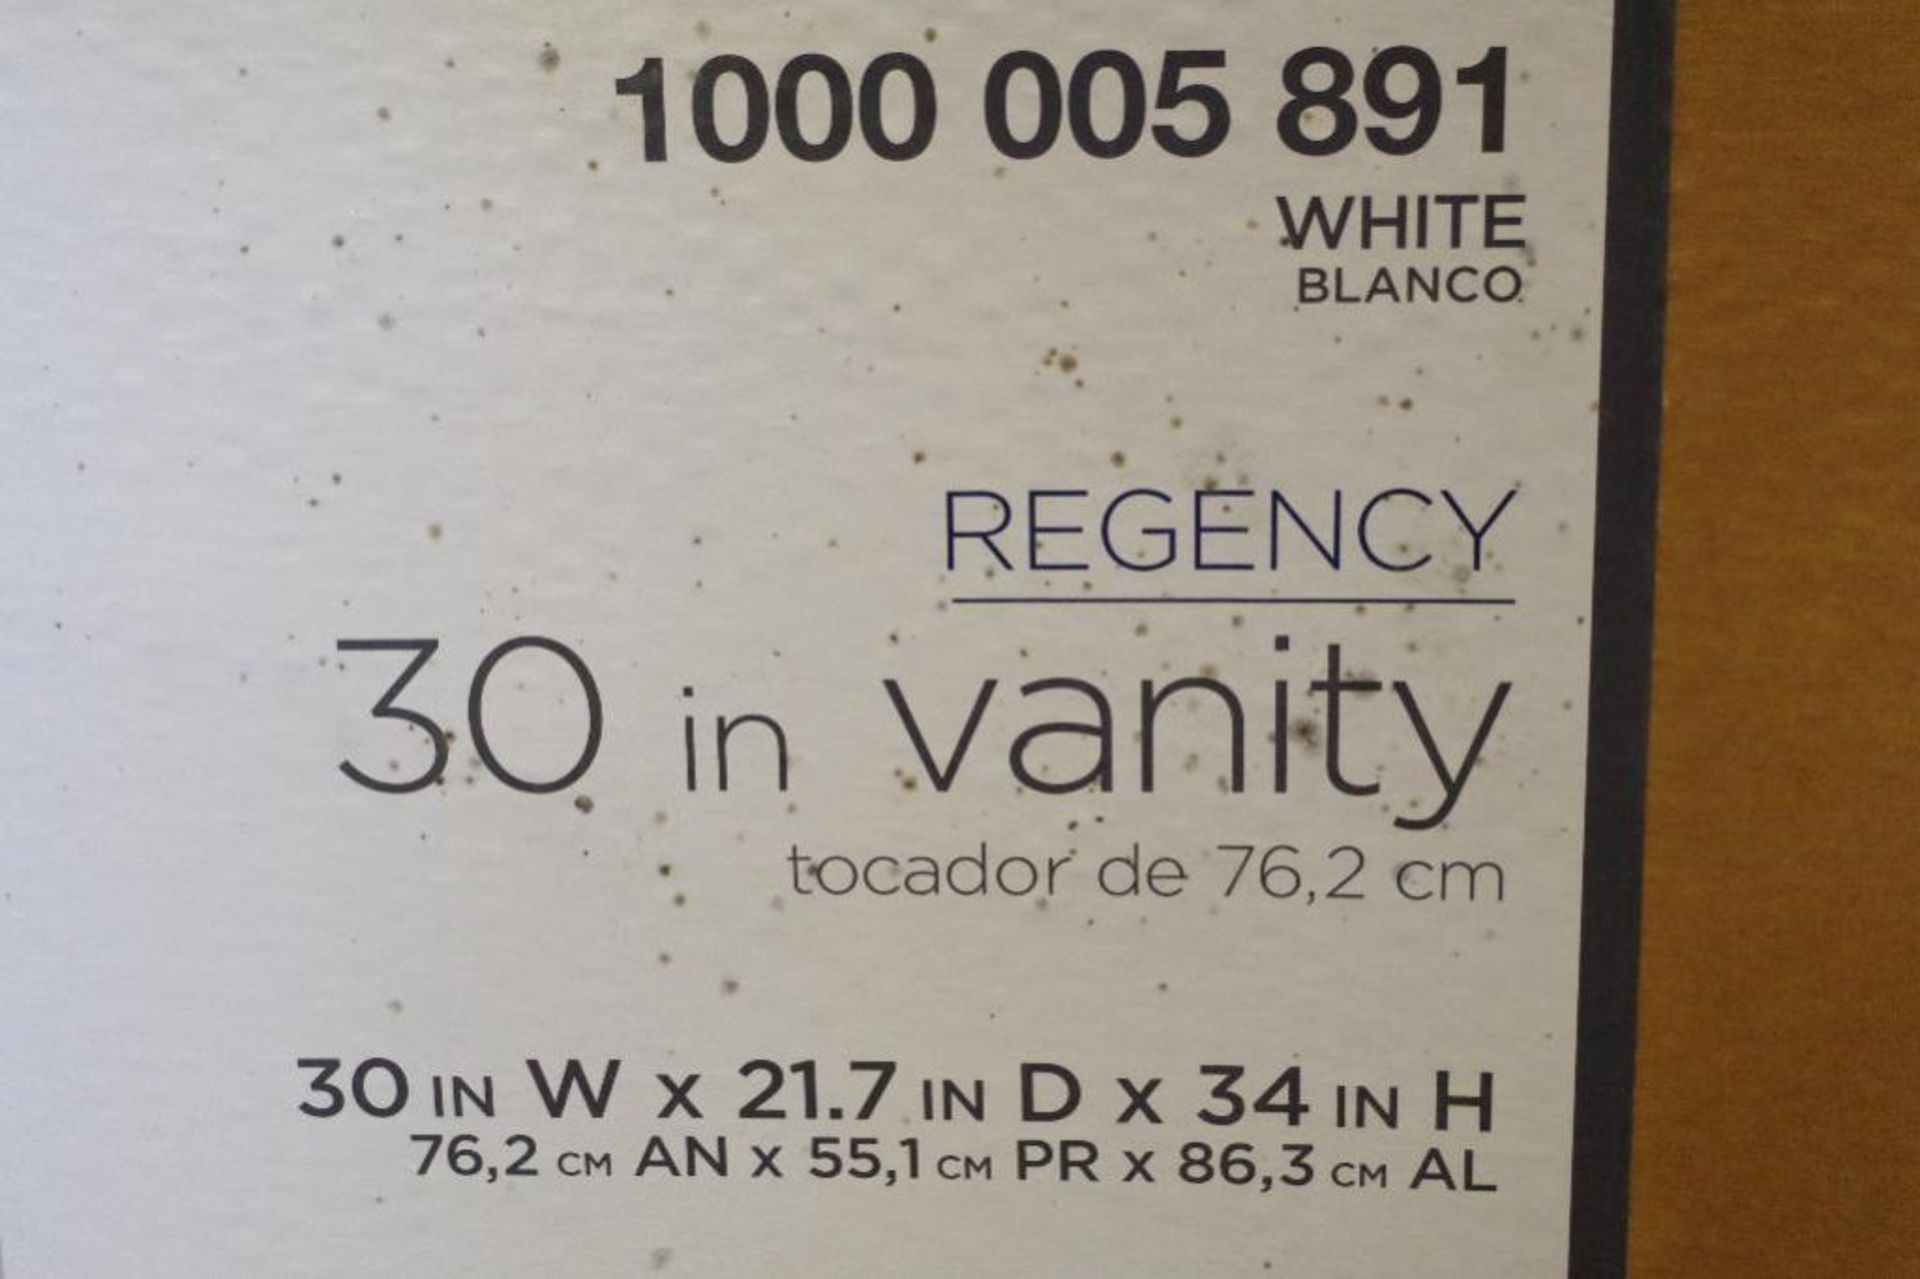 NEW GLACIER BAY Regency 30" Vanity, Color: White, Approx. 30" W x 21.7" D x 34" H - Image 6 of 13